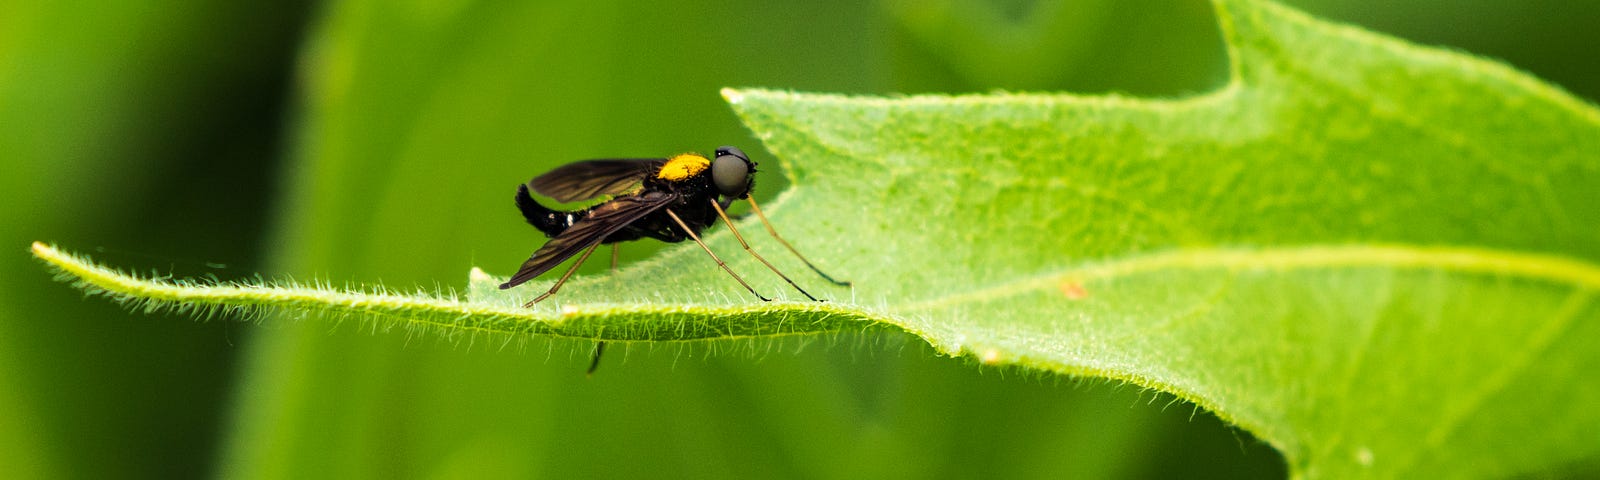 Golden-backed snipe fly.